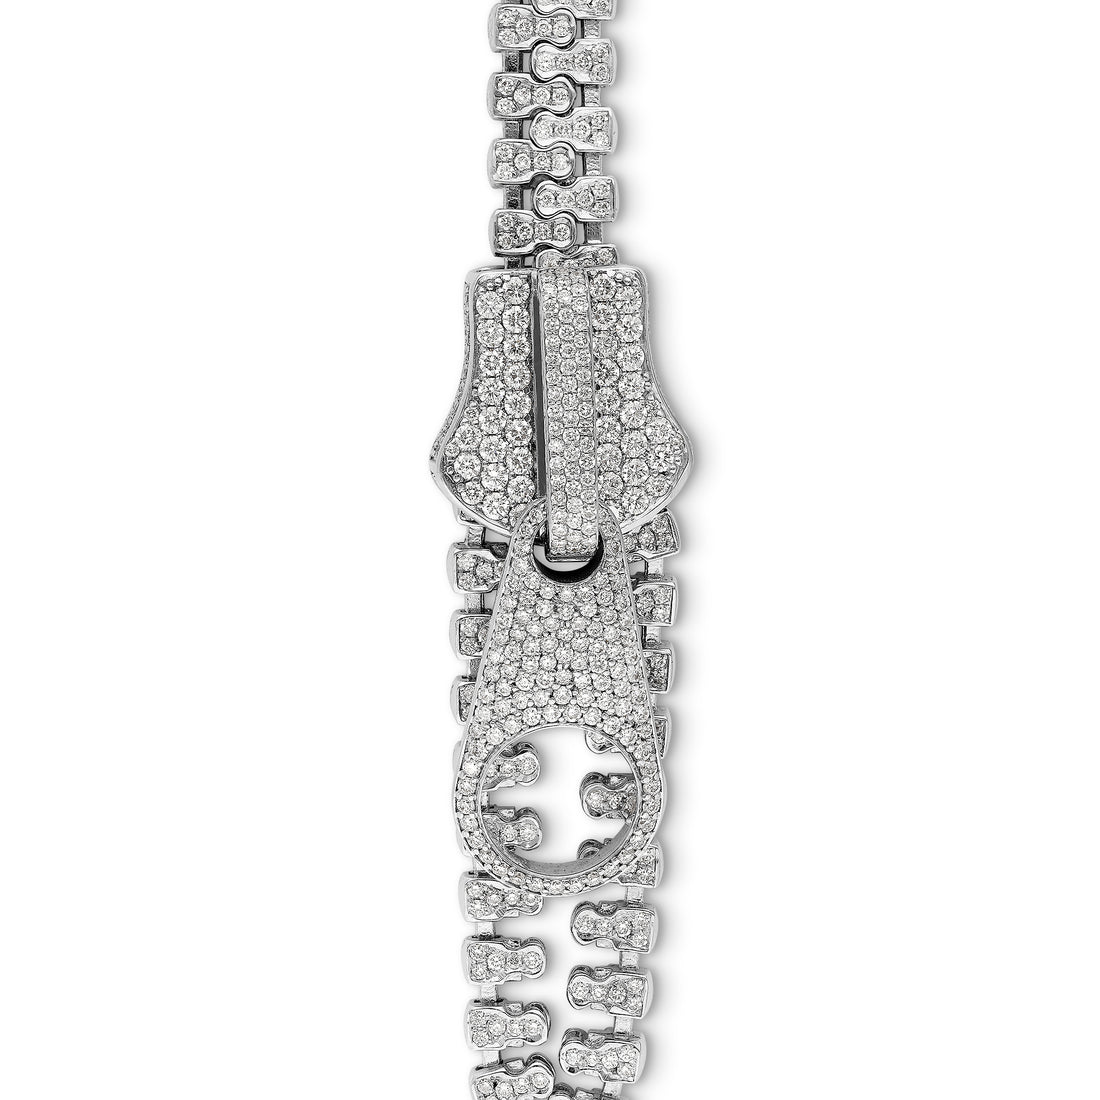 4.6 Carat Diamond Zipper Bracelet